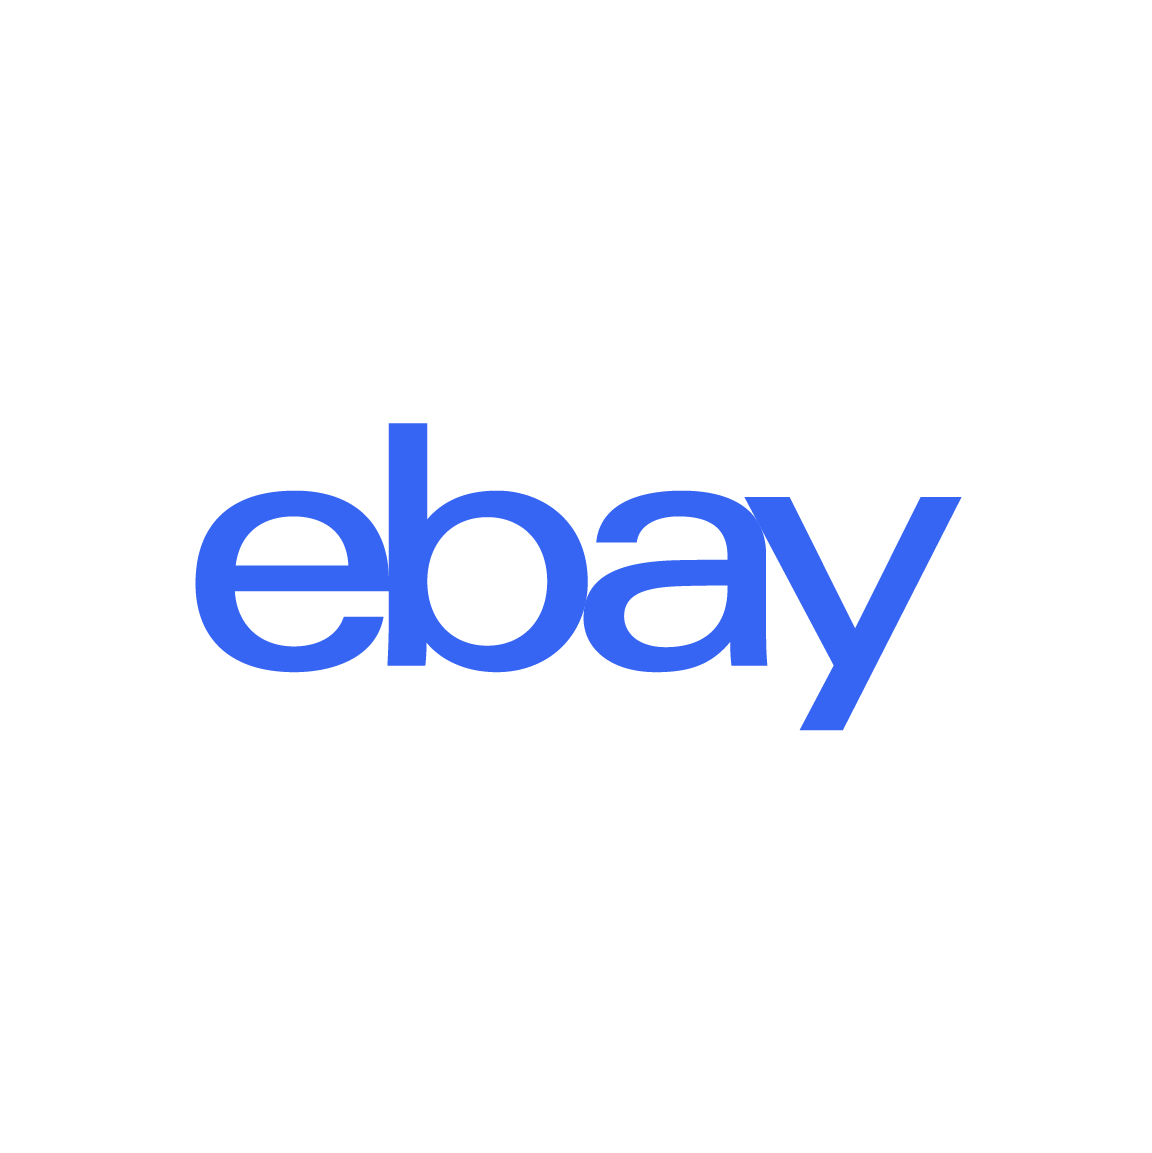 Buy Guide (ebony Look) Lladro Figurine